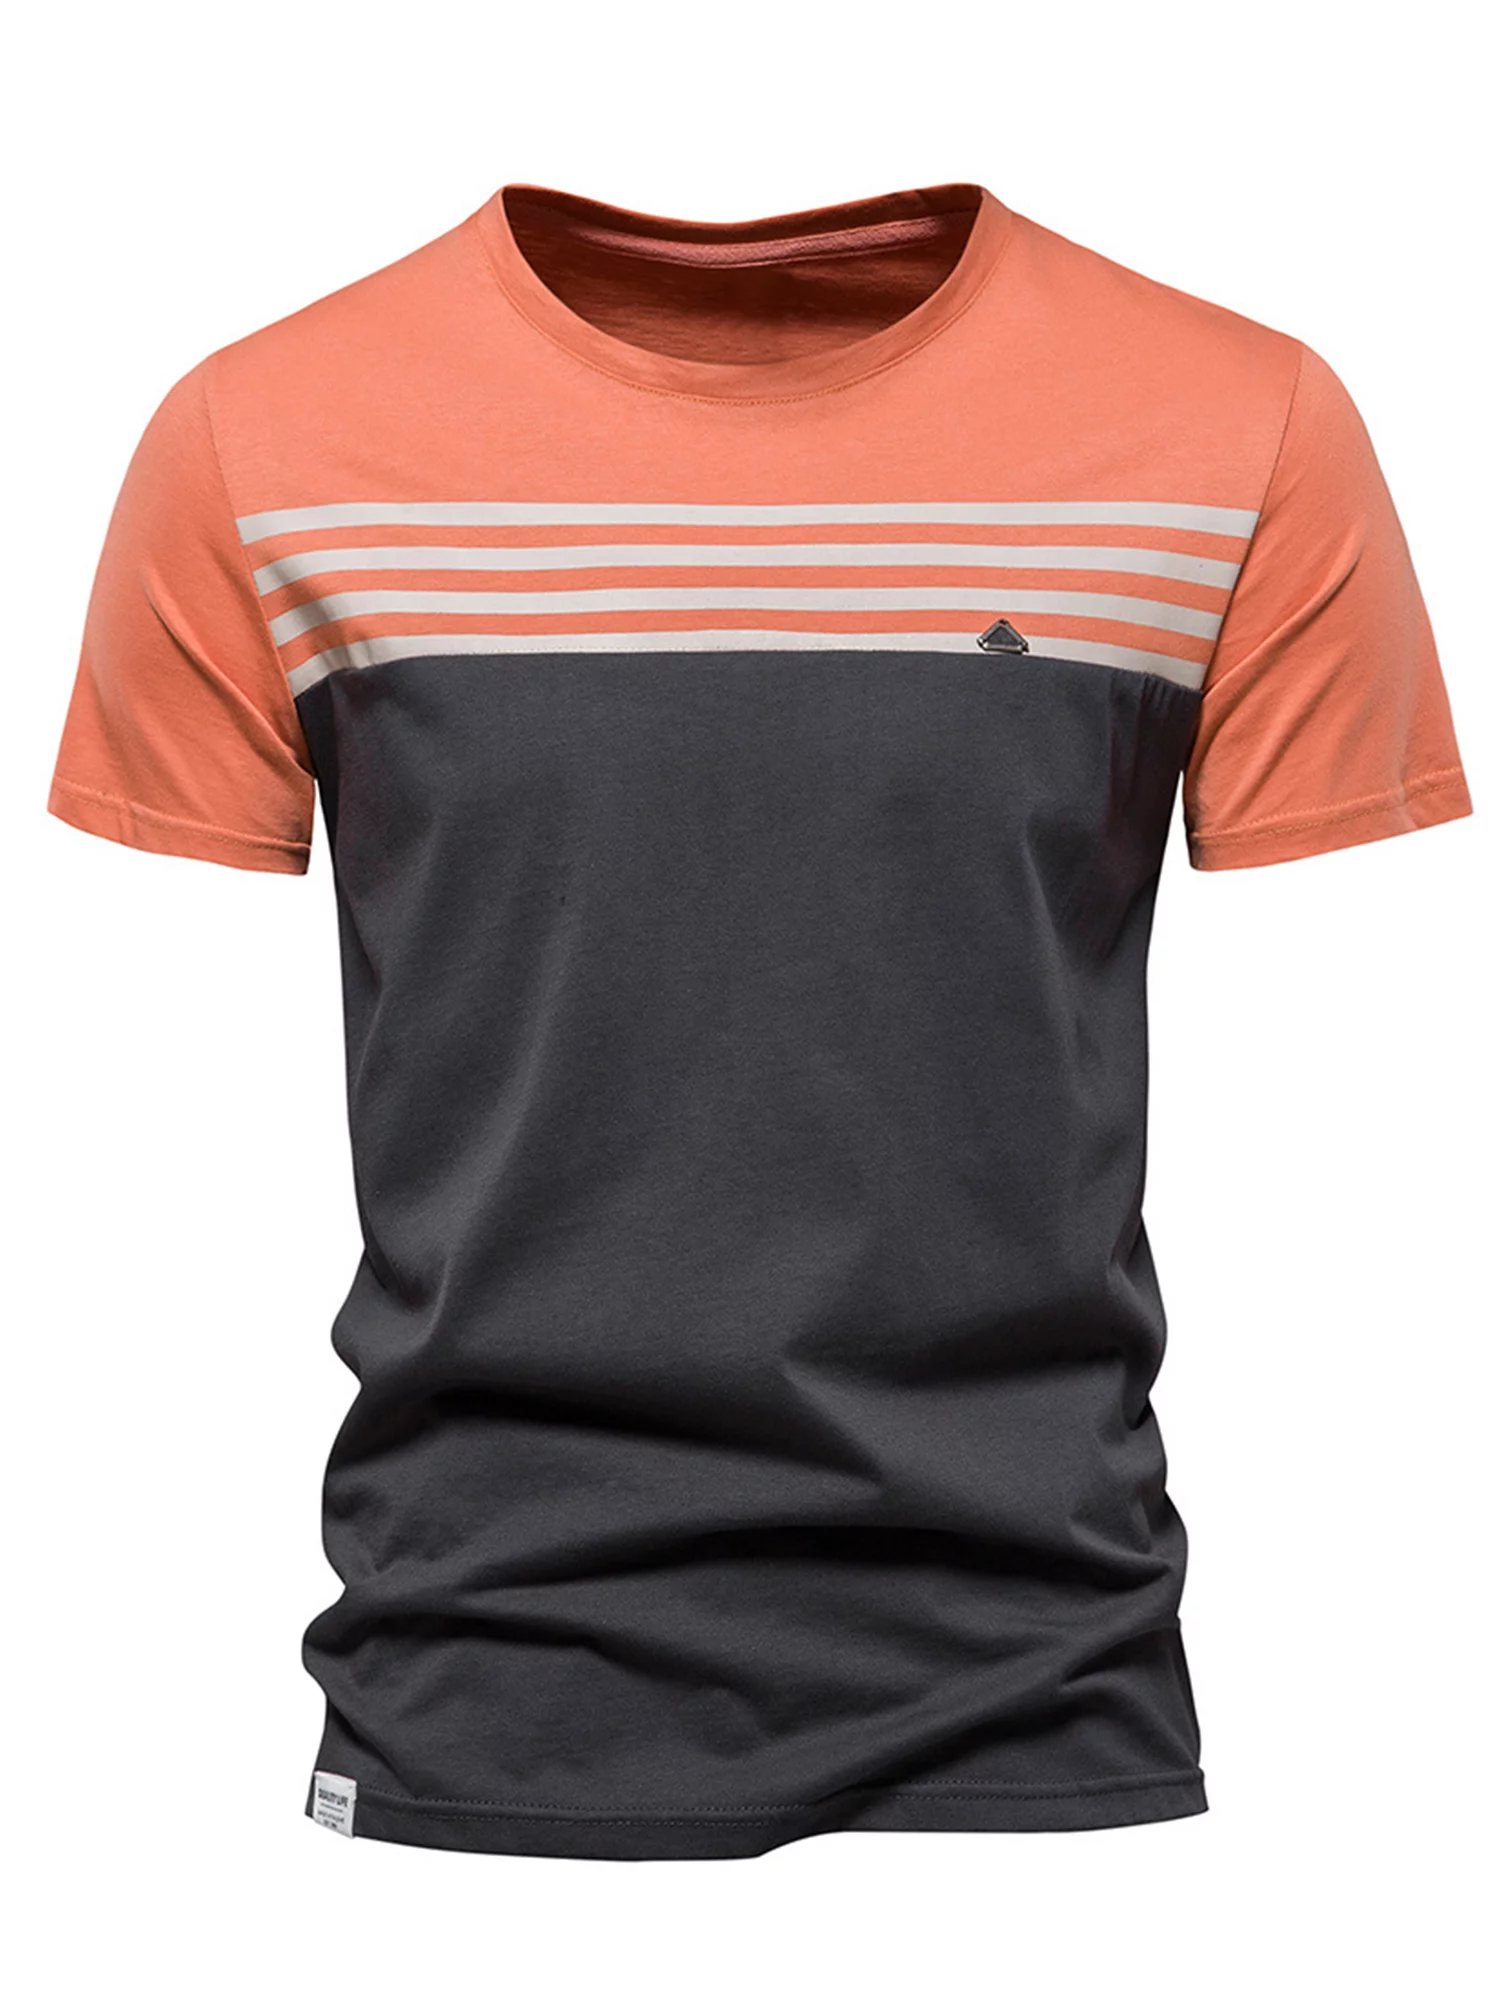 Casual Short Sleeve T Shirt Stripe Print Tee Shirt Breathable Tops Beach Summer Shirts For Men